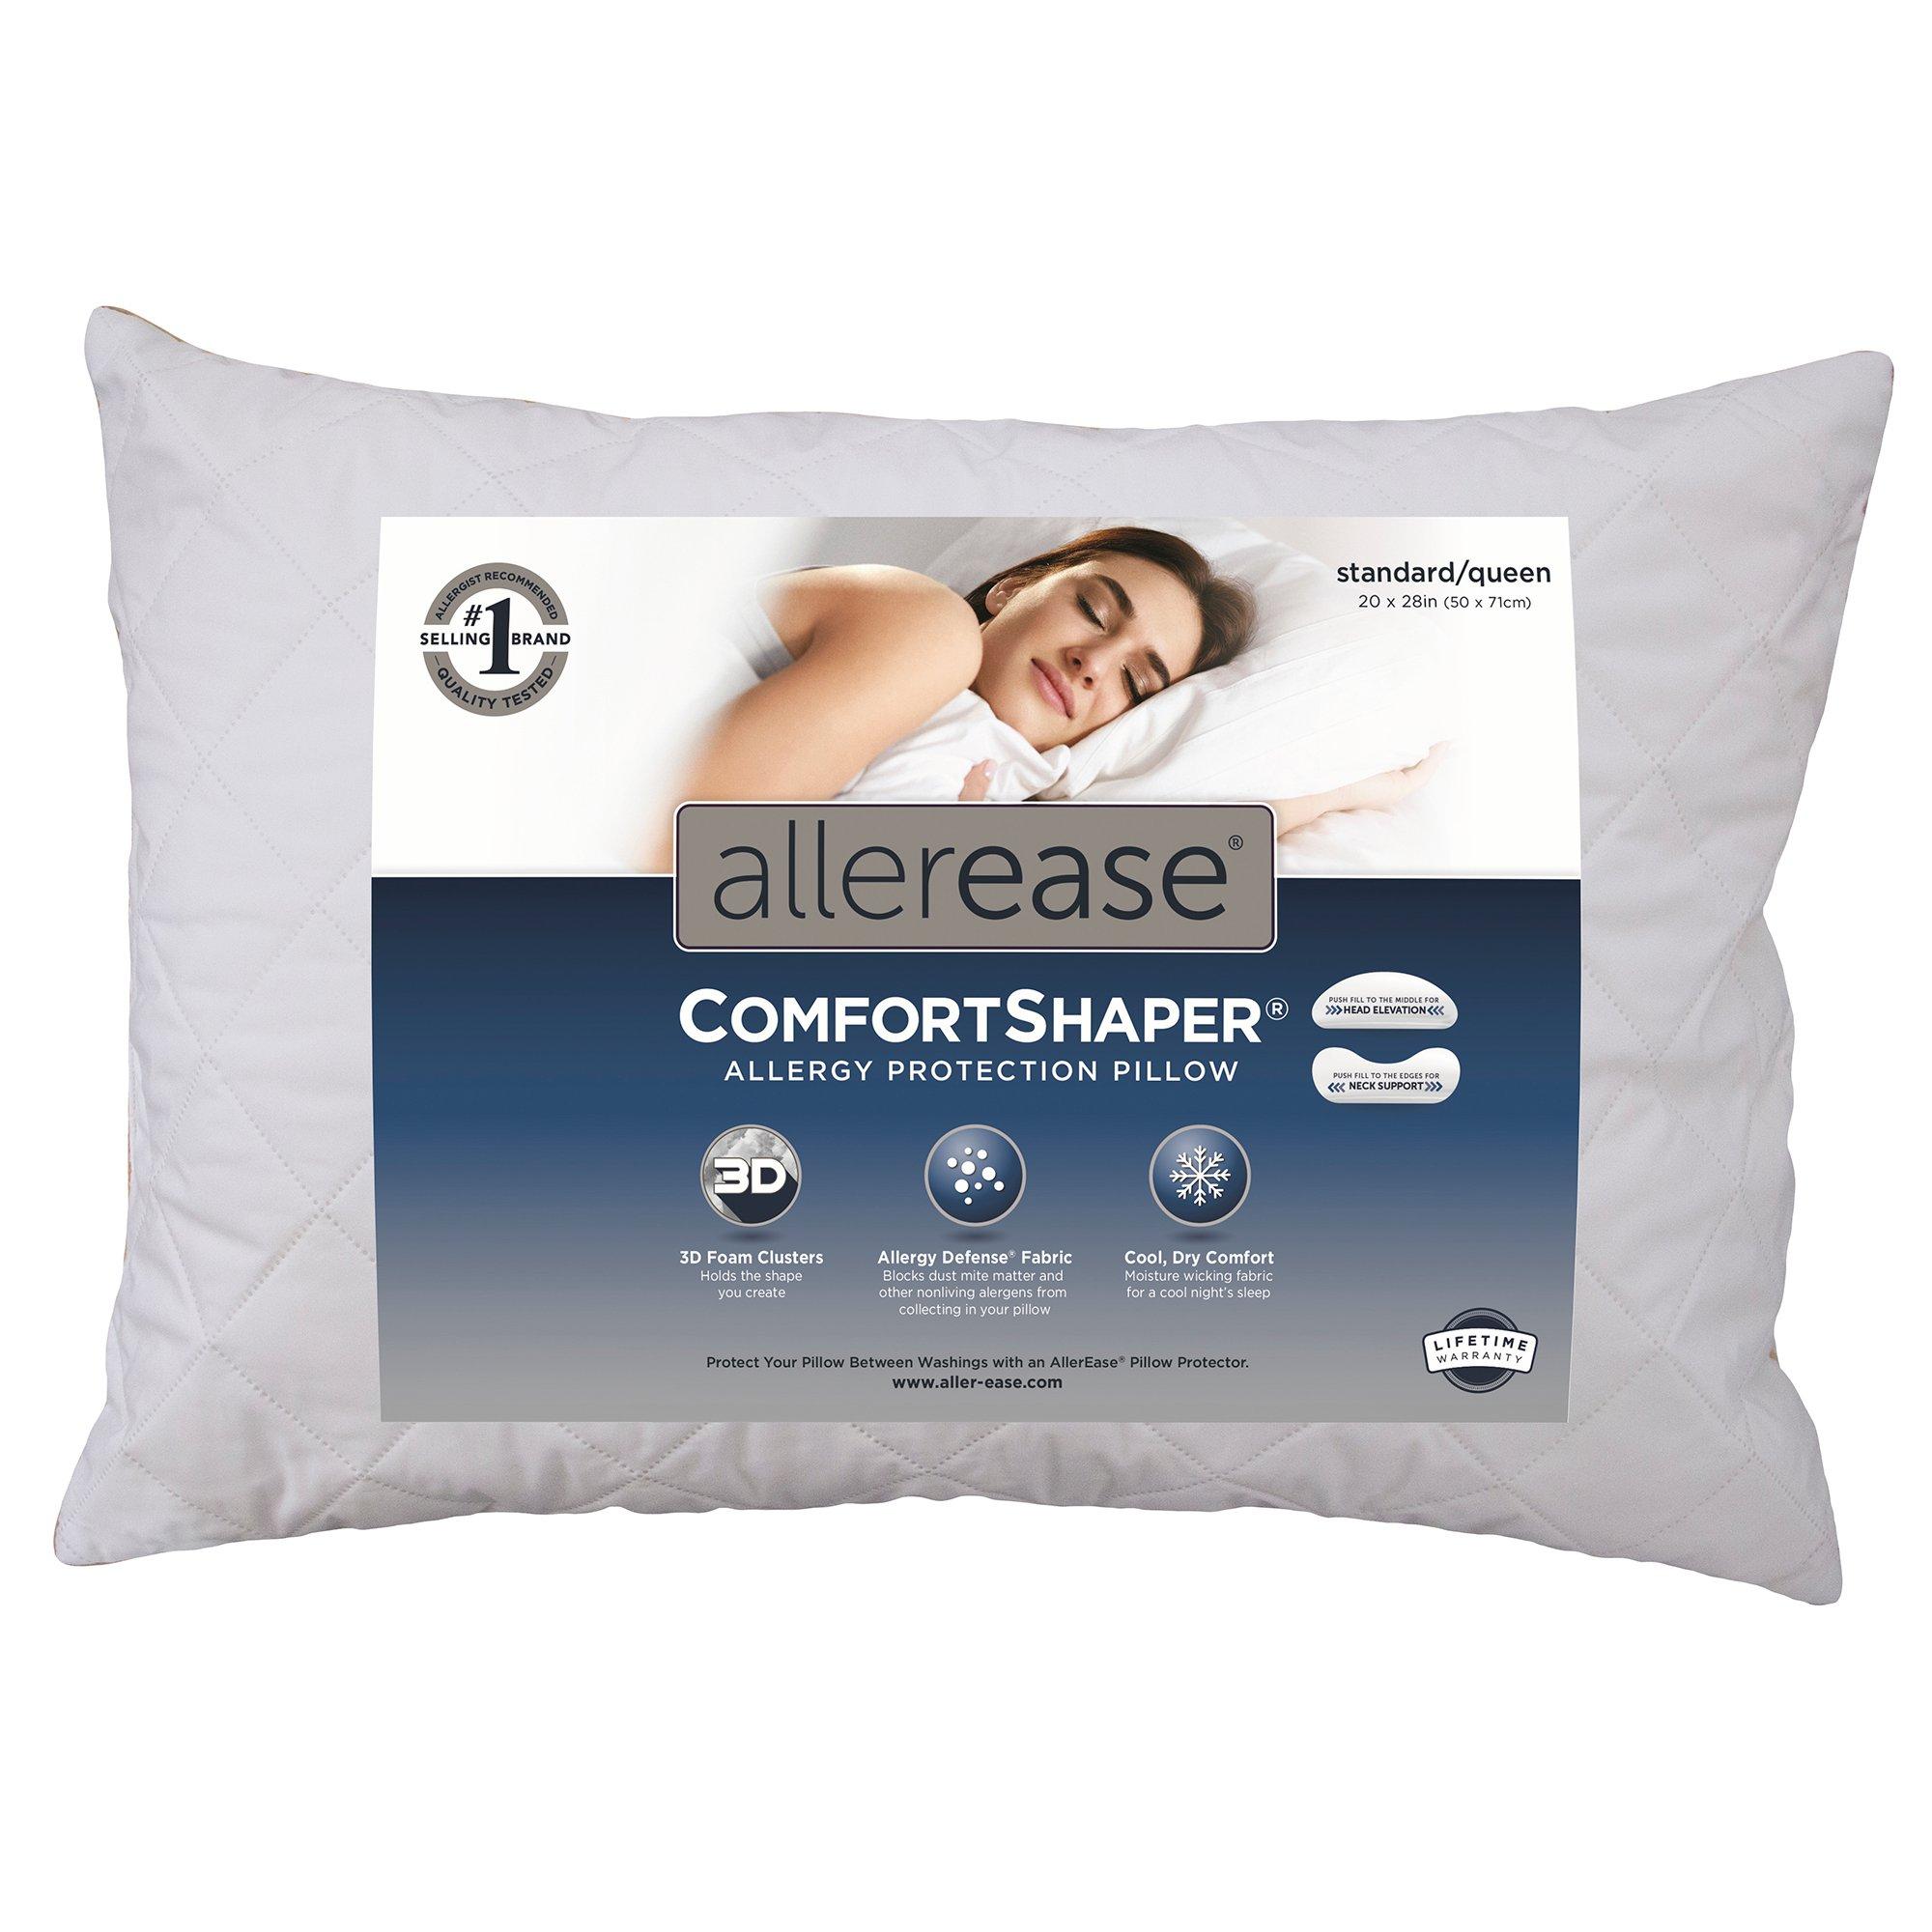 Allerease ComfortShaper Allergy Protection Pillow